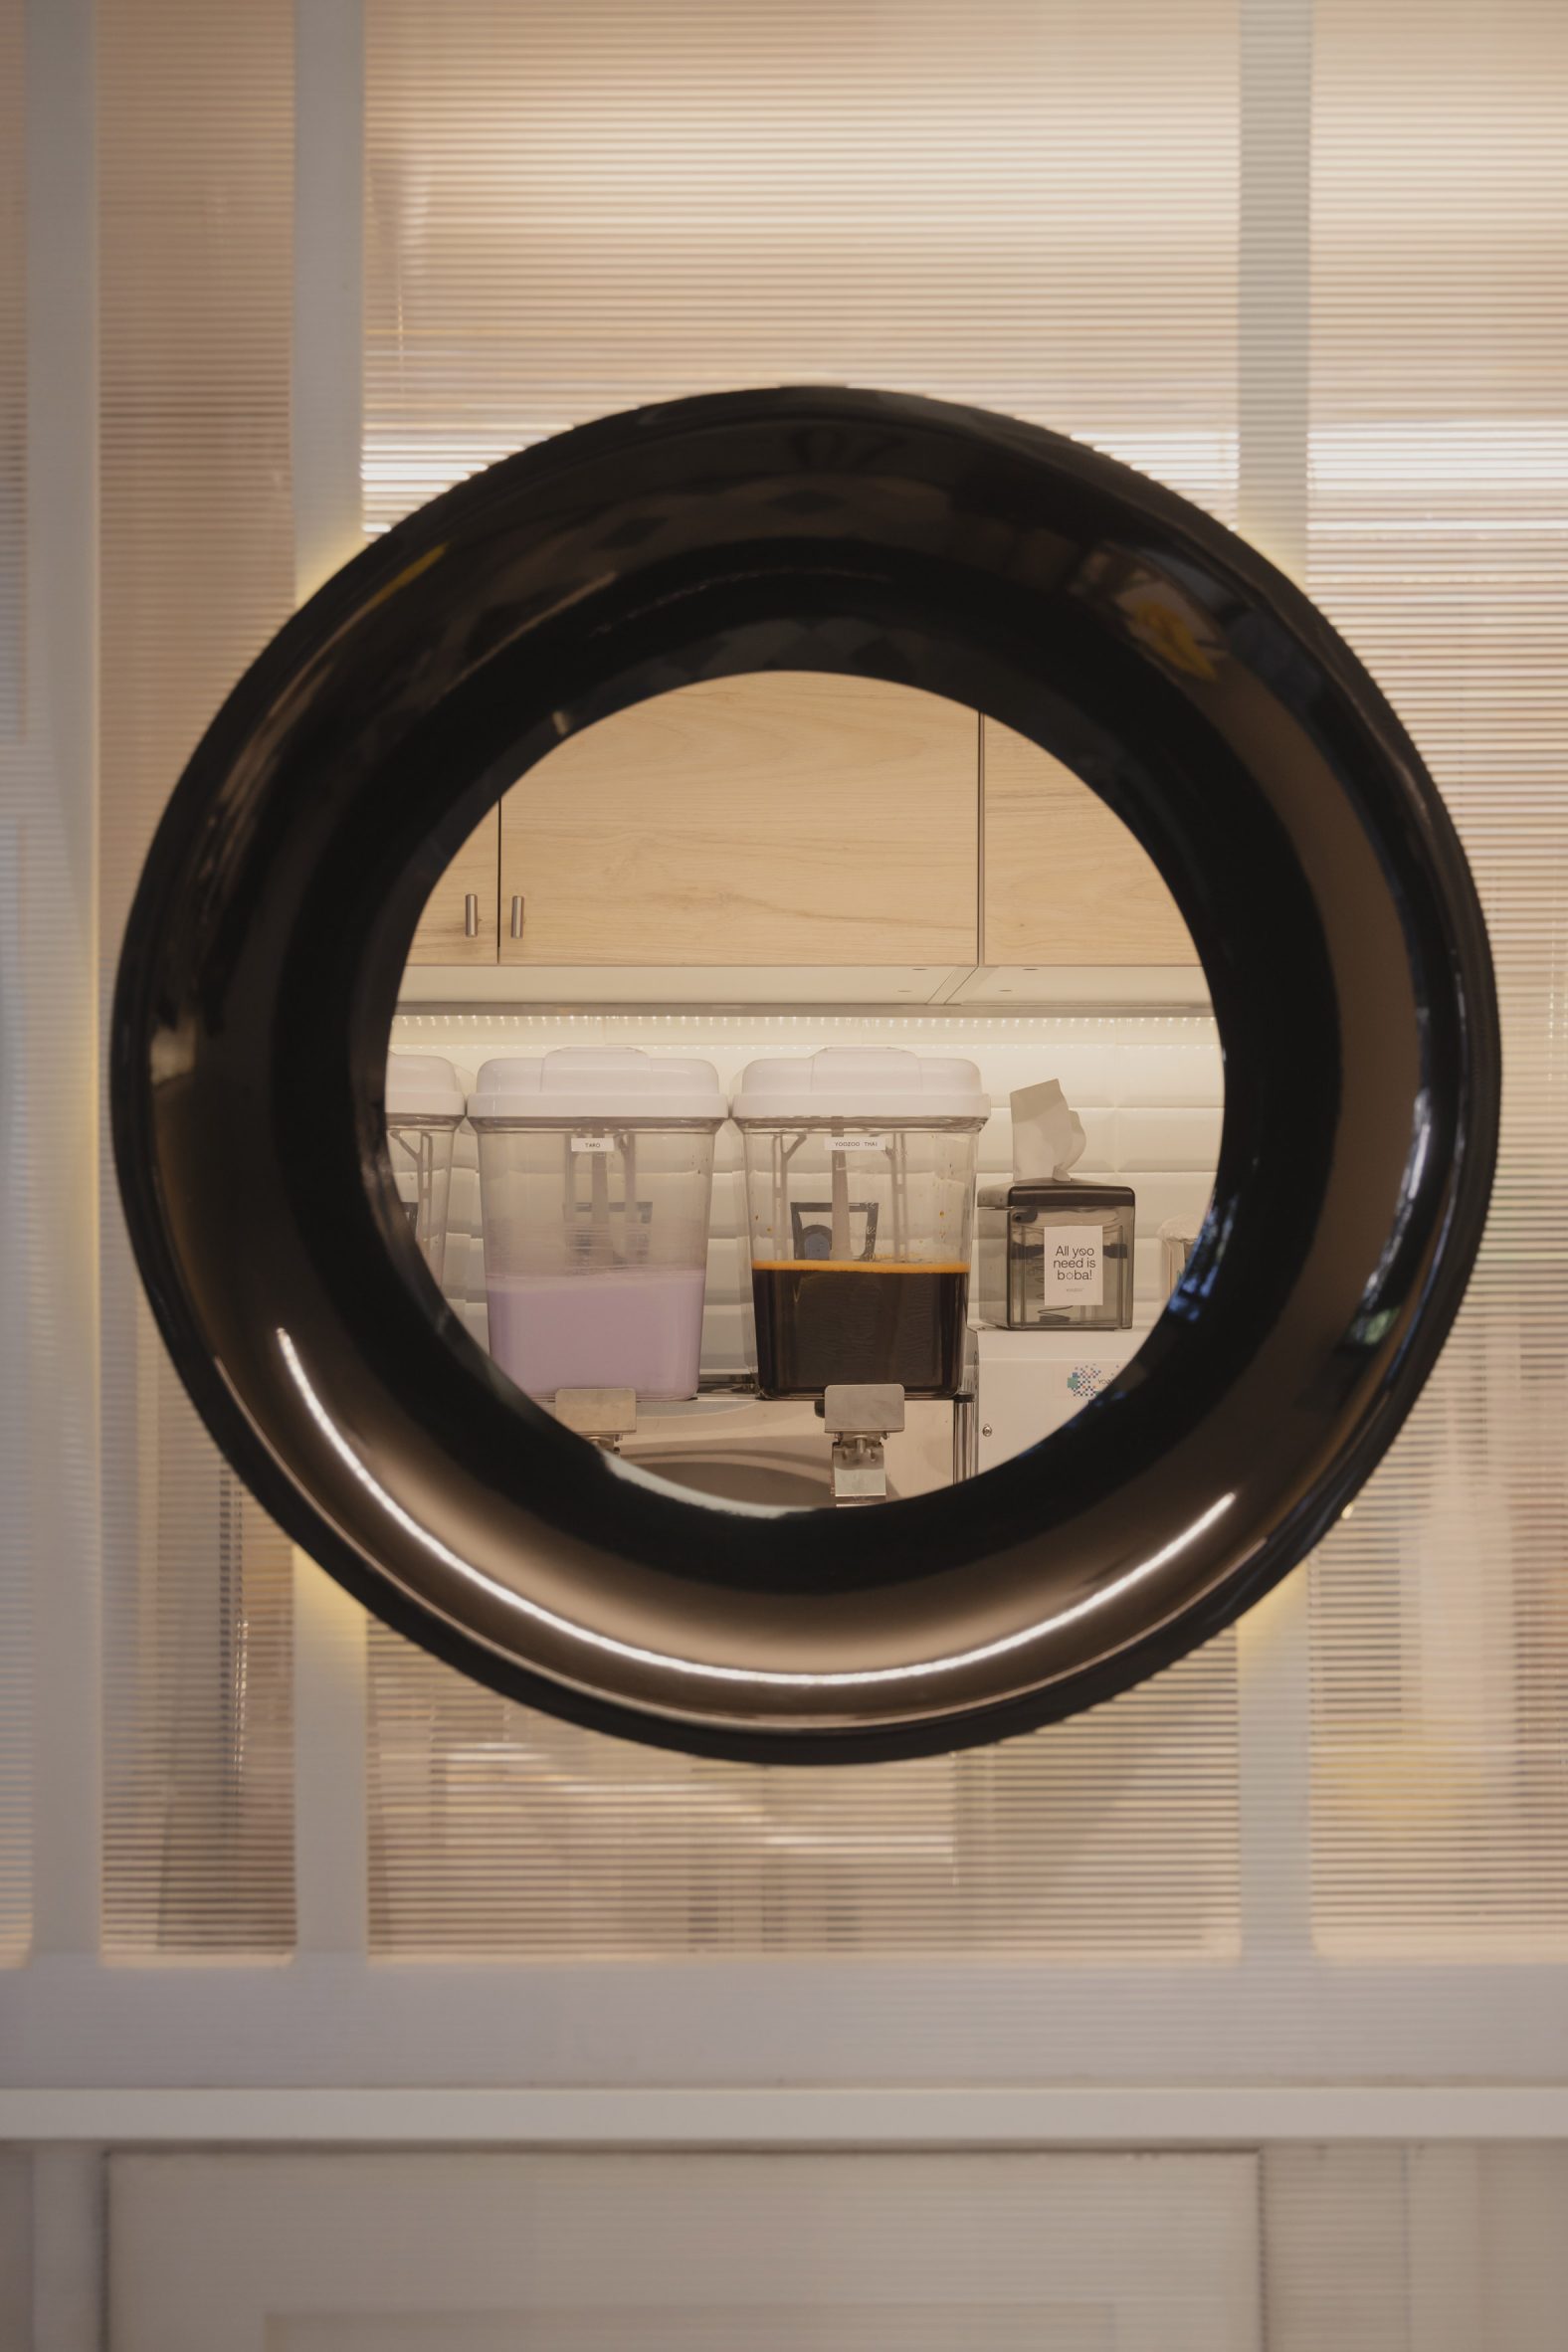 Black-ringed porthole with view of boba tea prep area